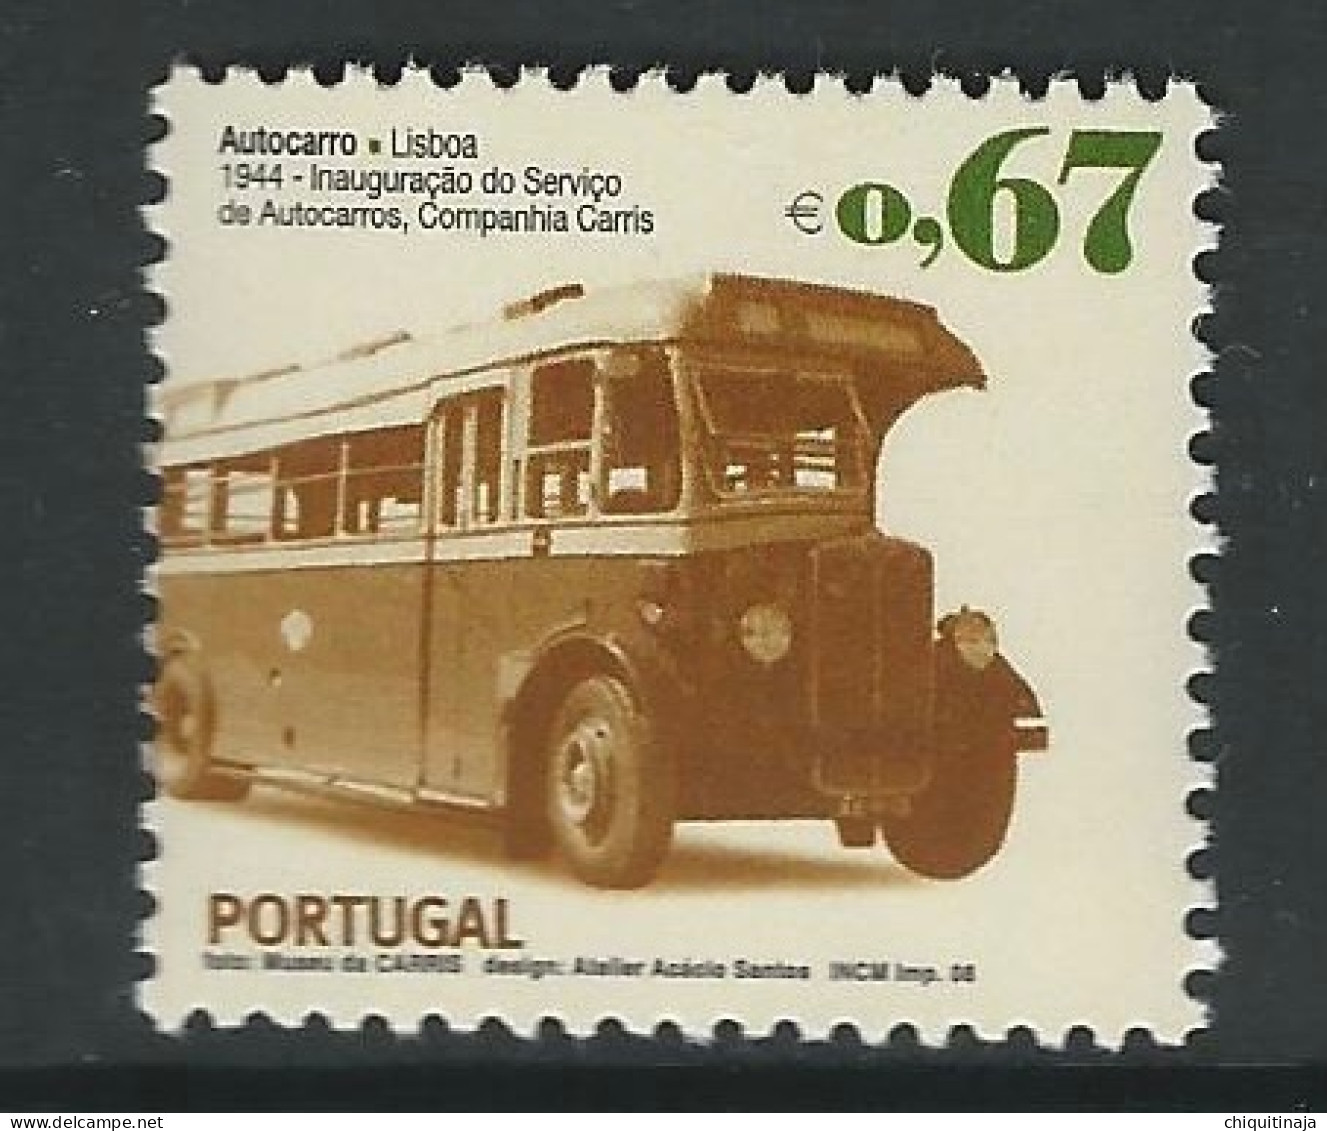 Portugal 2008 “Transportes Urbanos” MNH/** - Unused Stamps